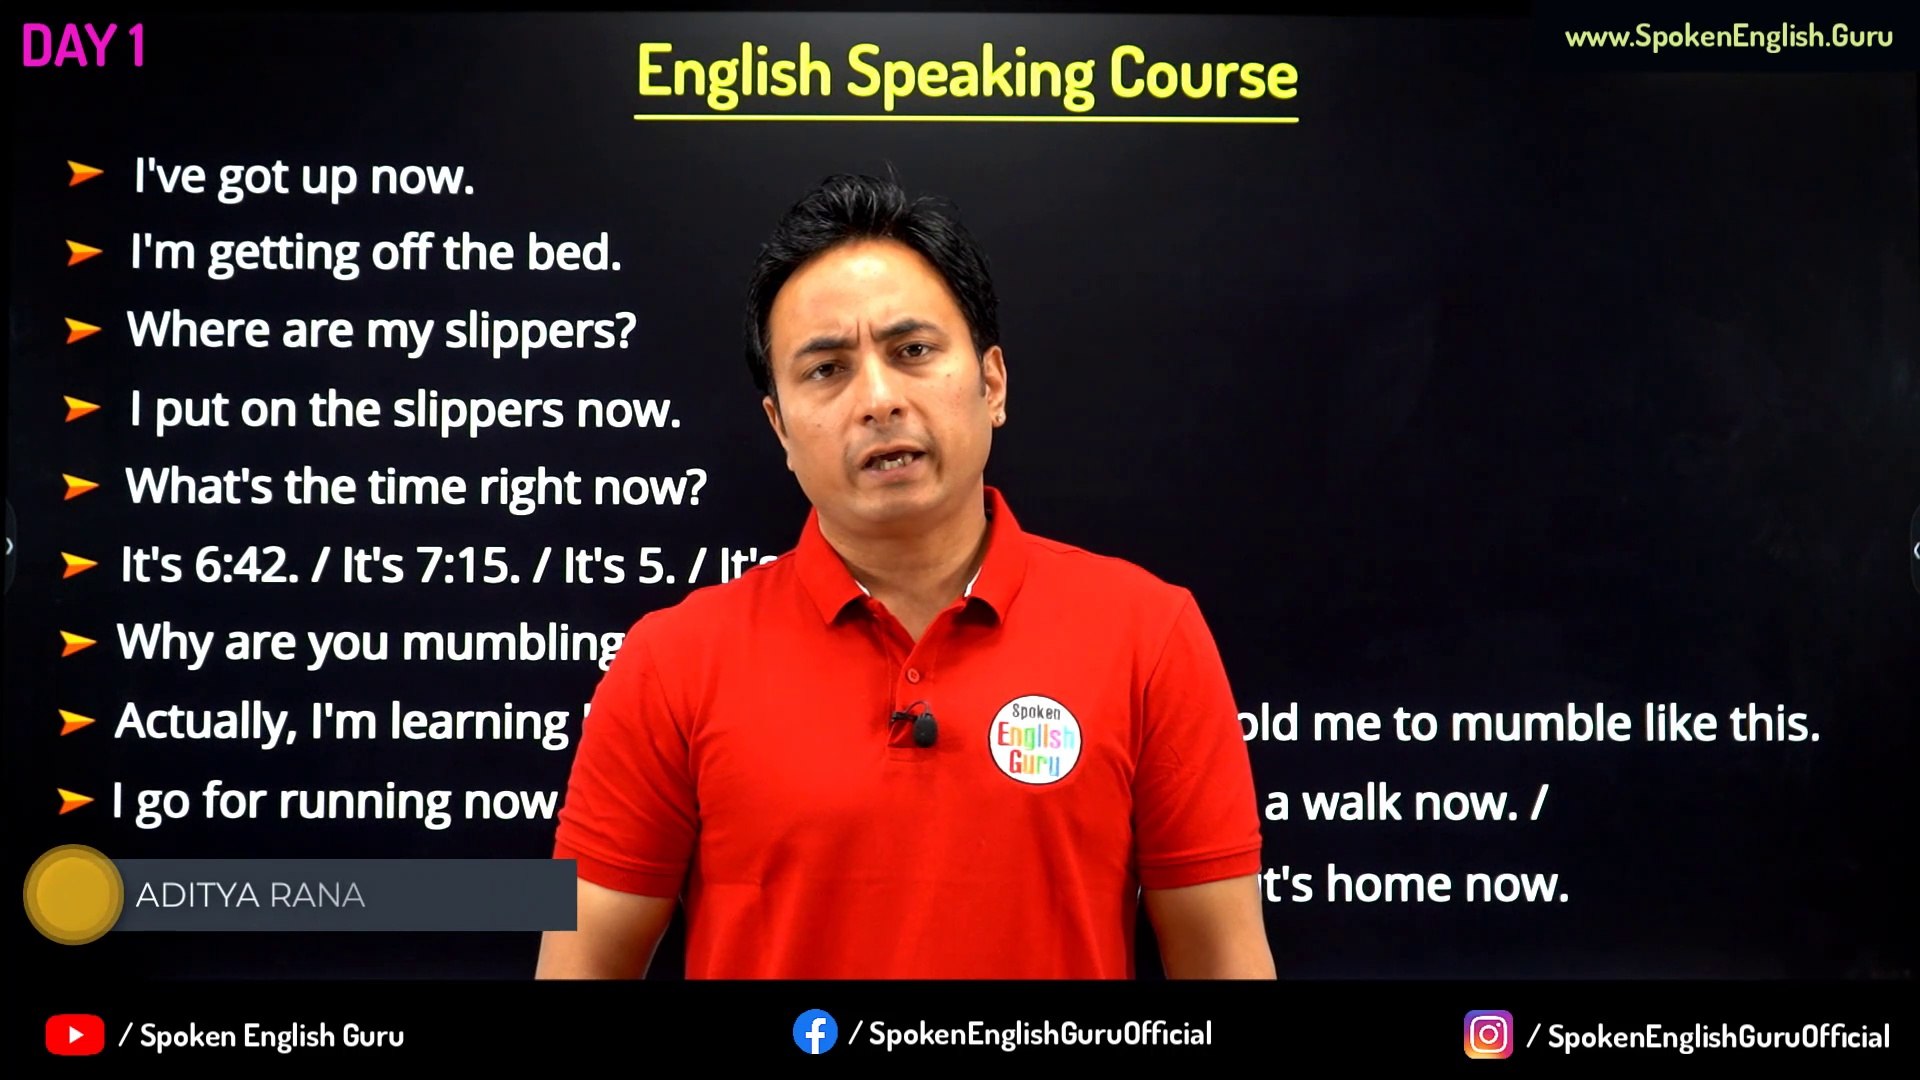 Follow @english.speaking.guru Follow @english.speaking.guru Follow